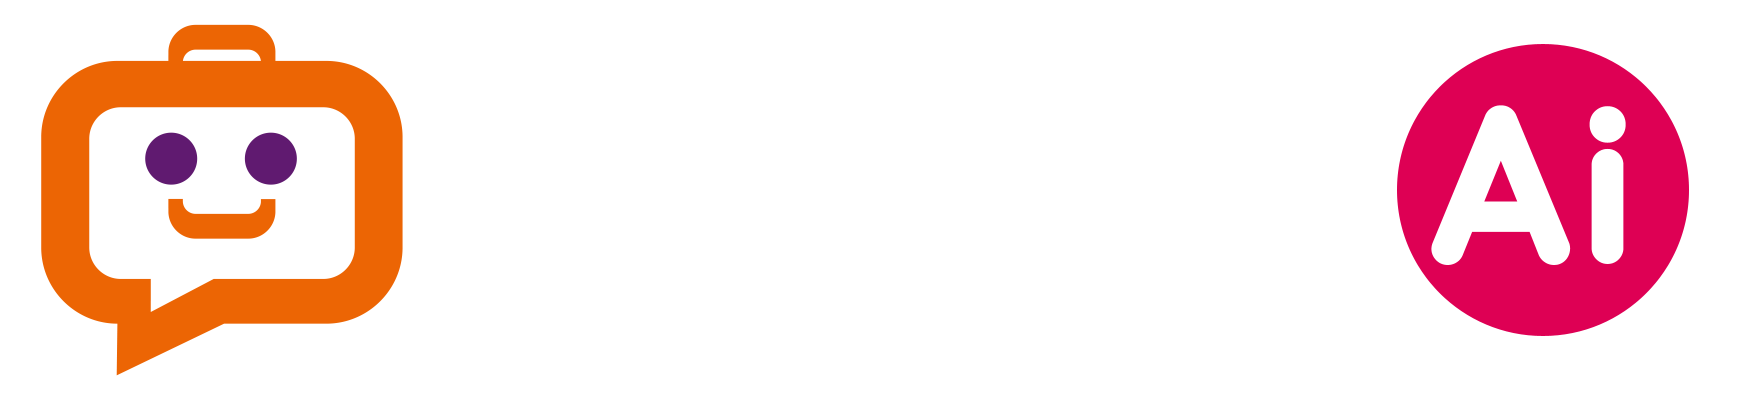 umni-logo-ai-white